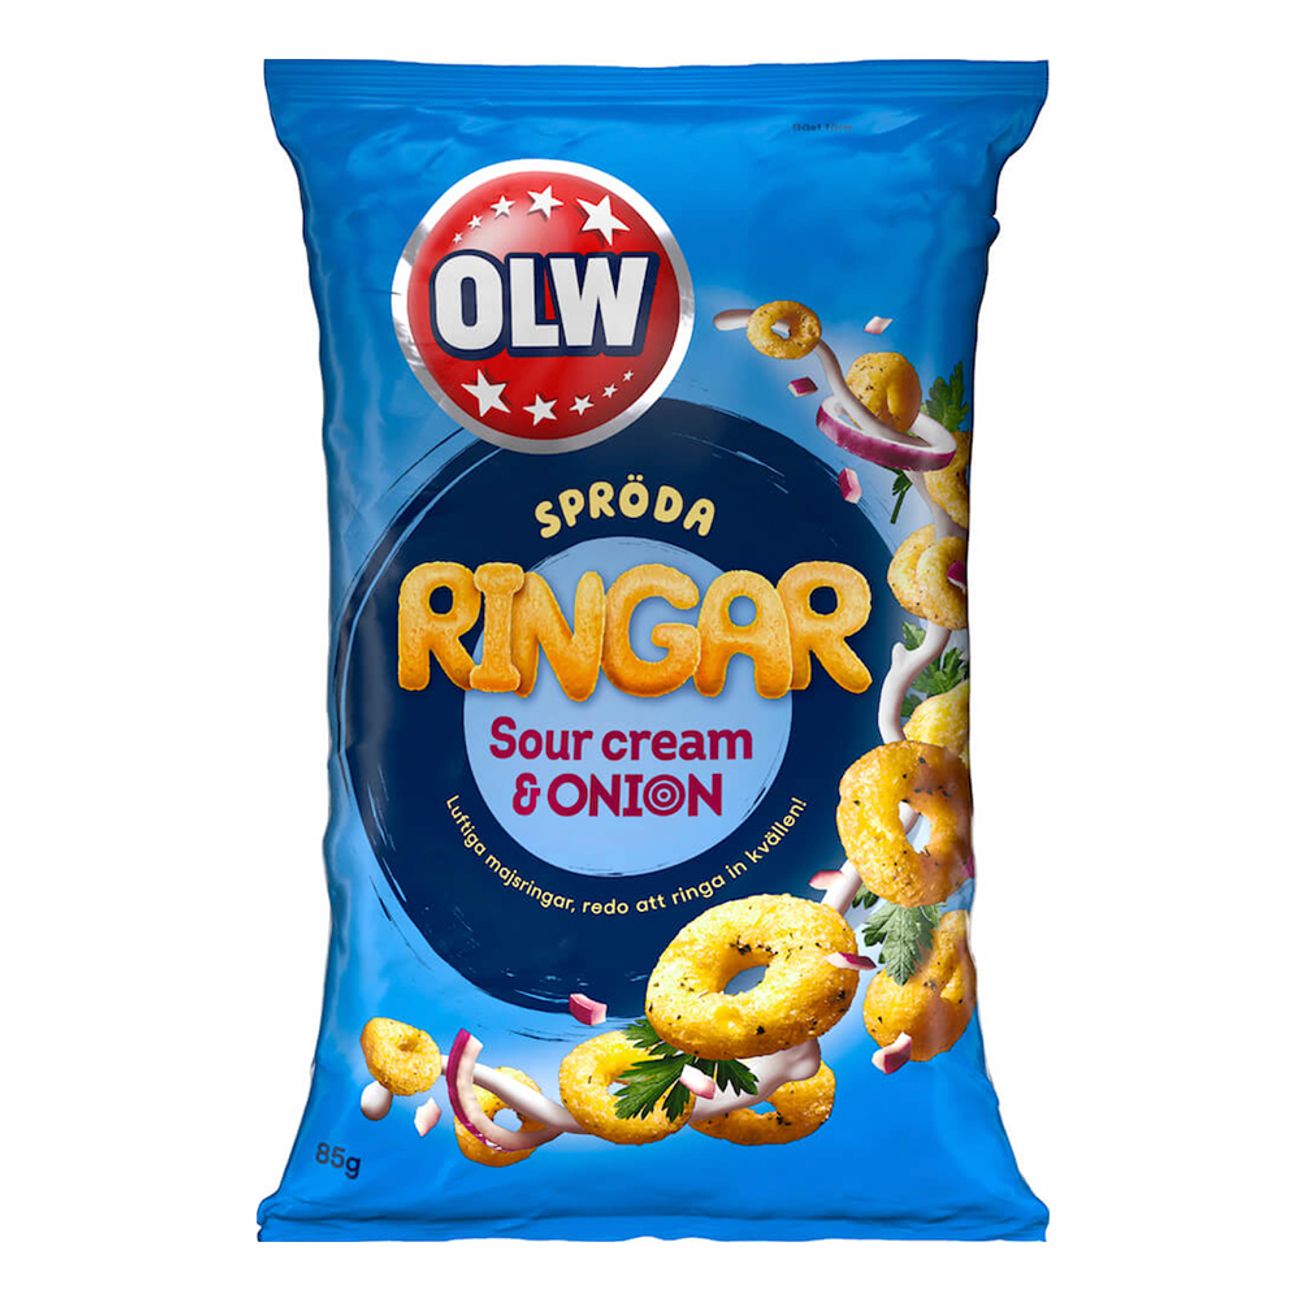 olw-sproda-ringar-sourcream-onion-100890-1